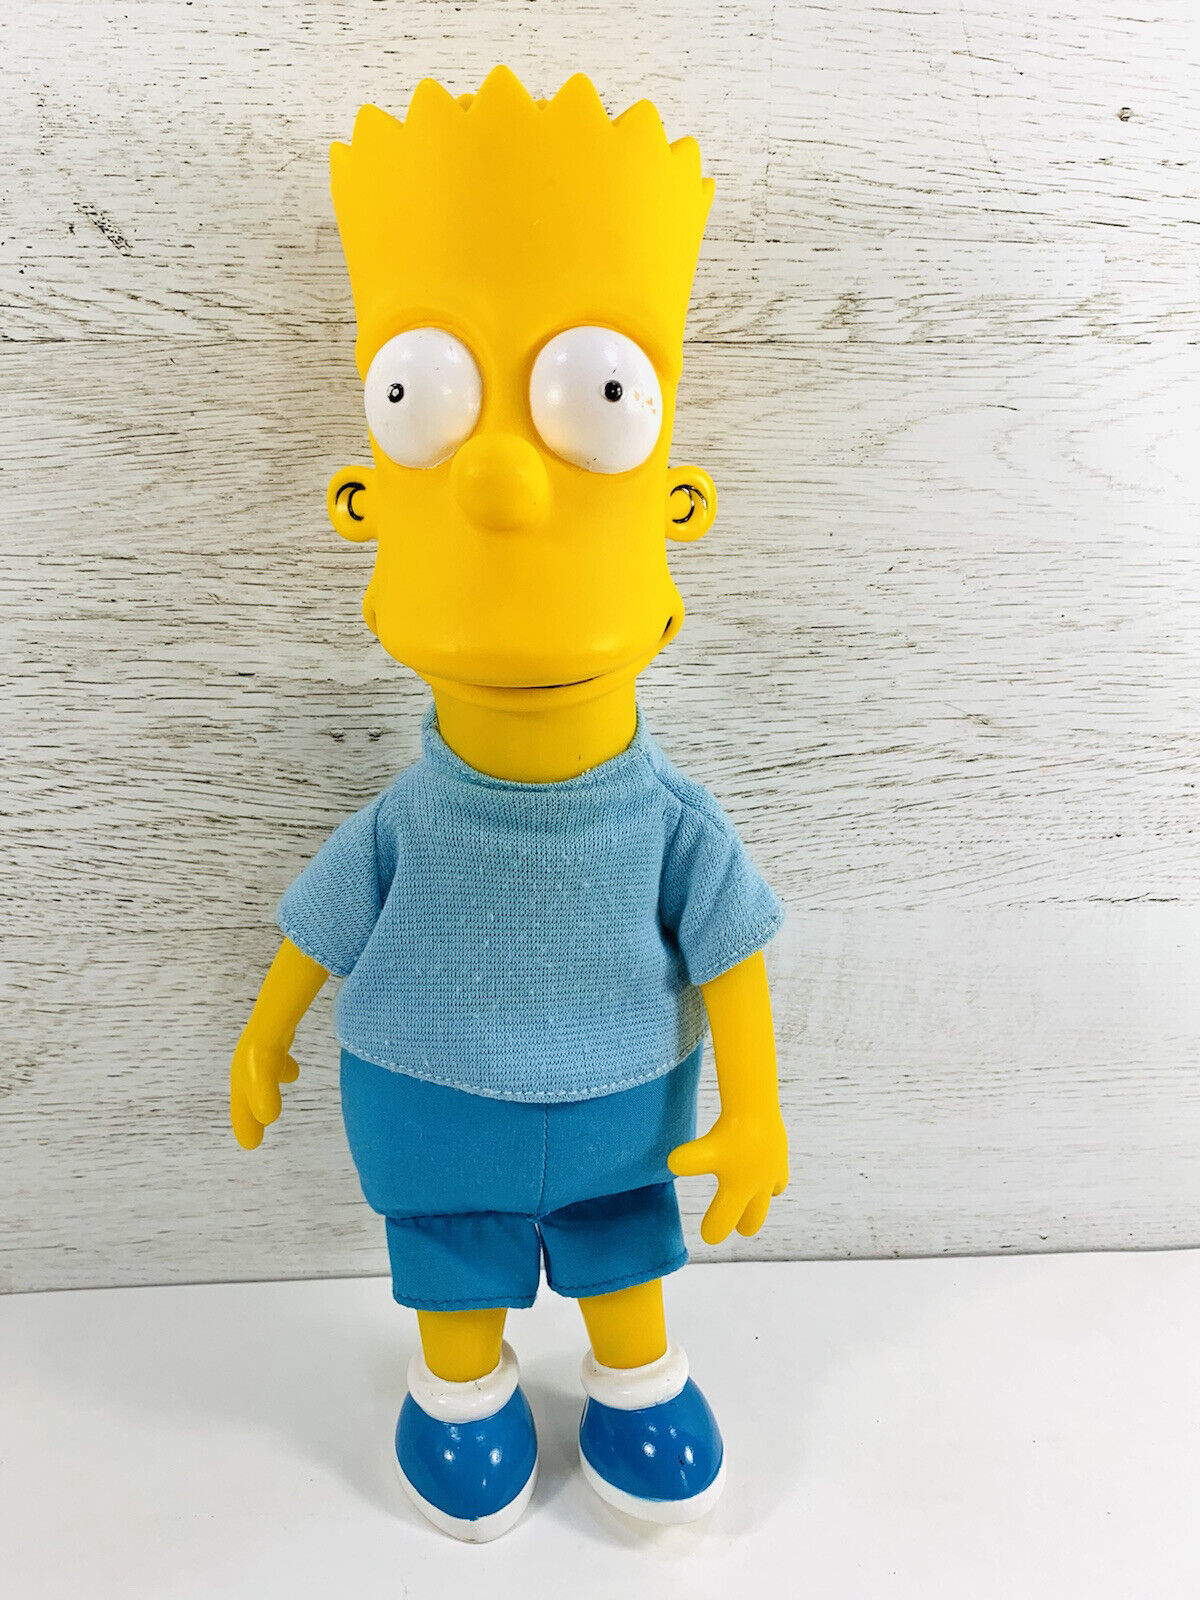 Bart Simpson 11” Collectible Doll Vinyl Soft Body By Dan Dee 1990 Matt Groening